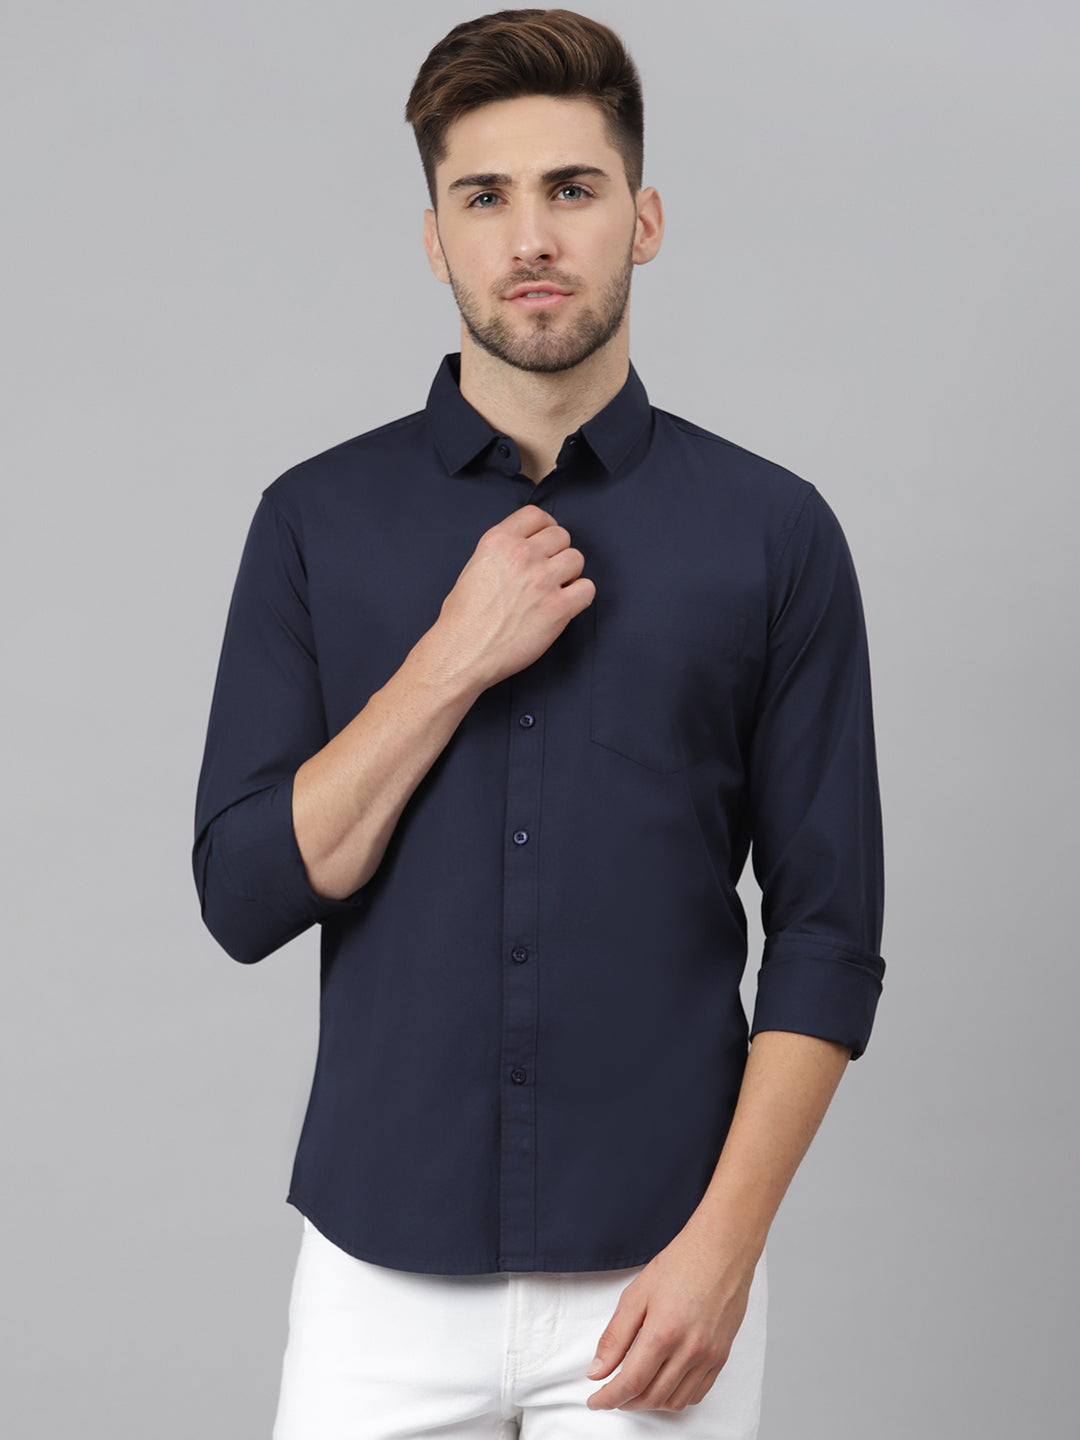 FOCIL Black & Sky Blue Formal Wear Combo Shirt for Men's (Pack of 2) :  : Fashion